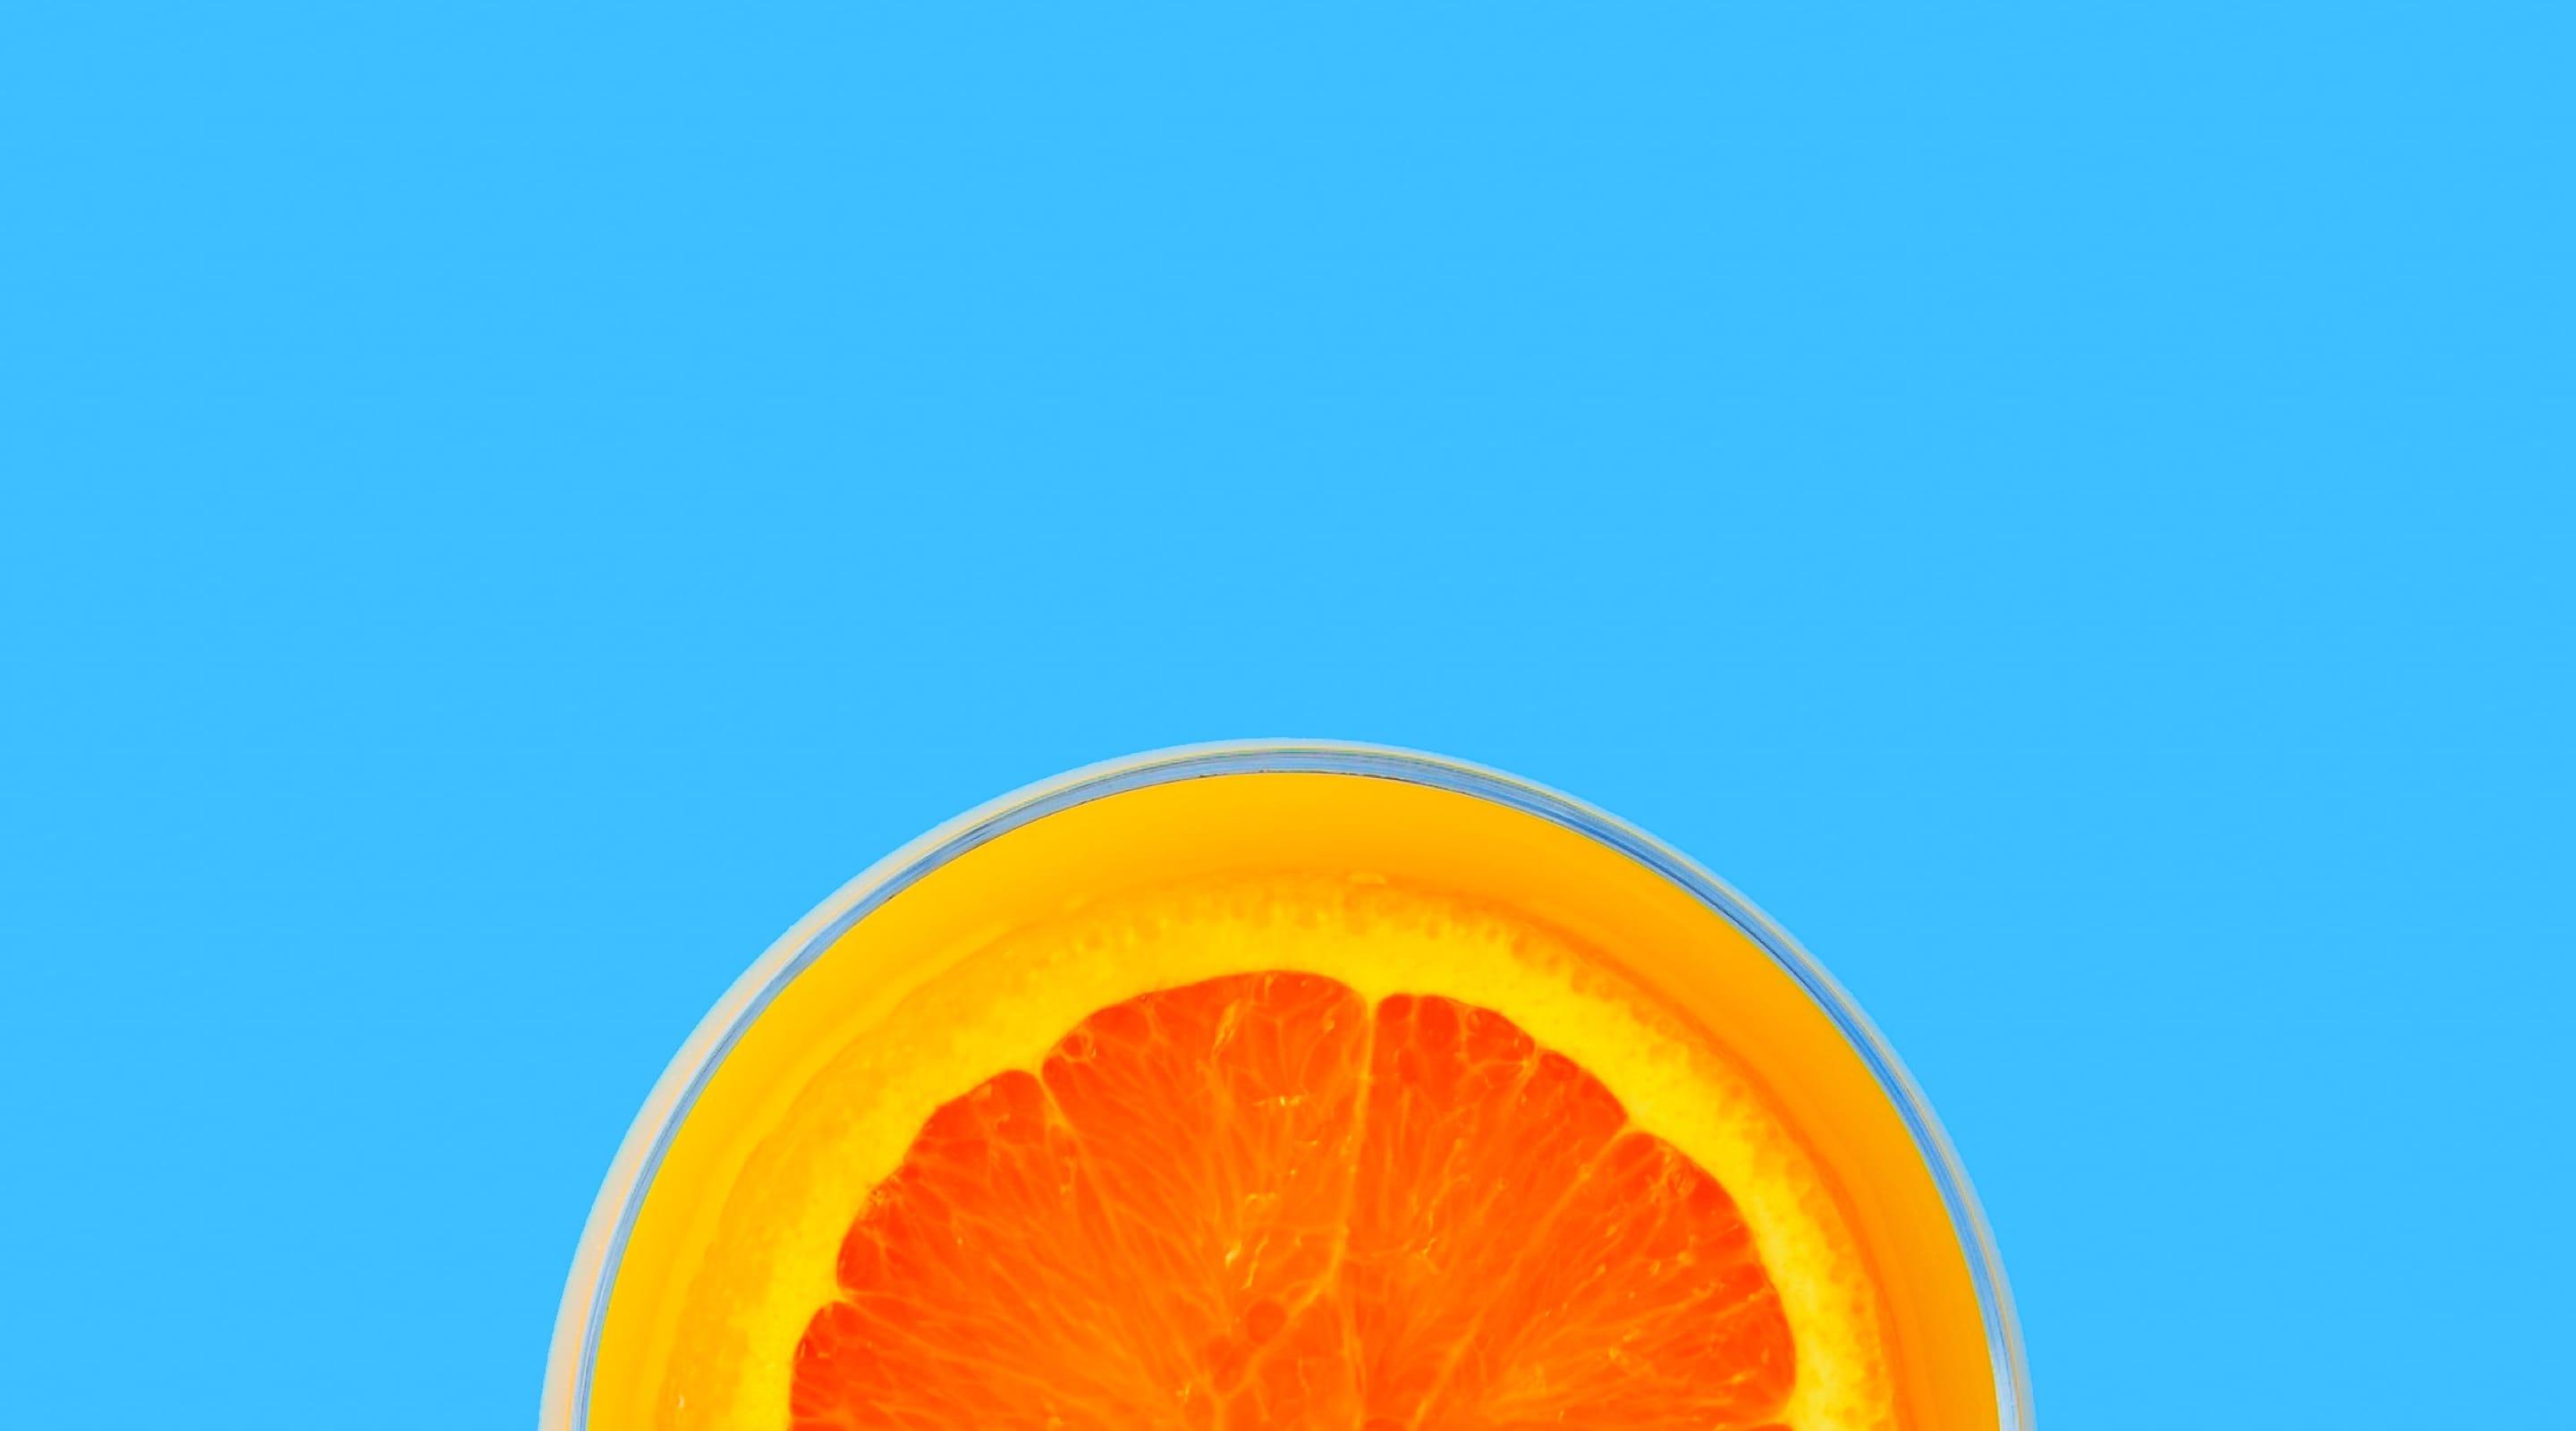 An orange sliced in half